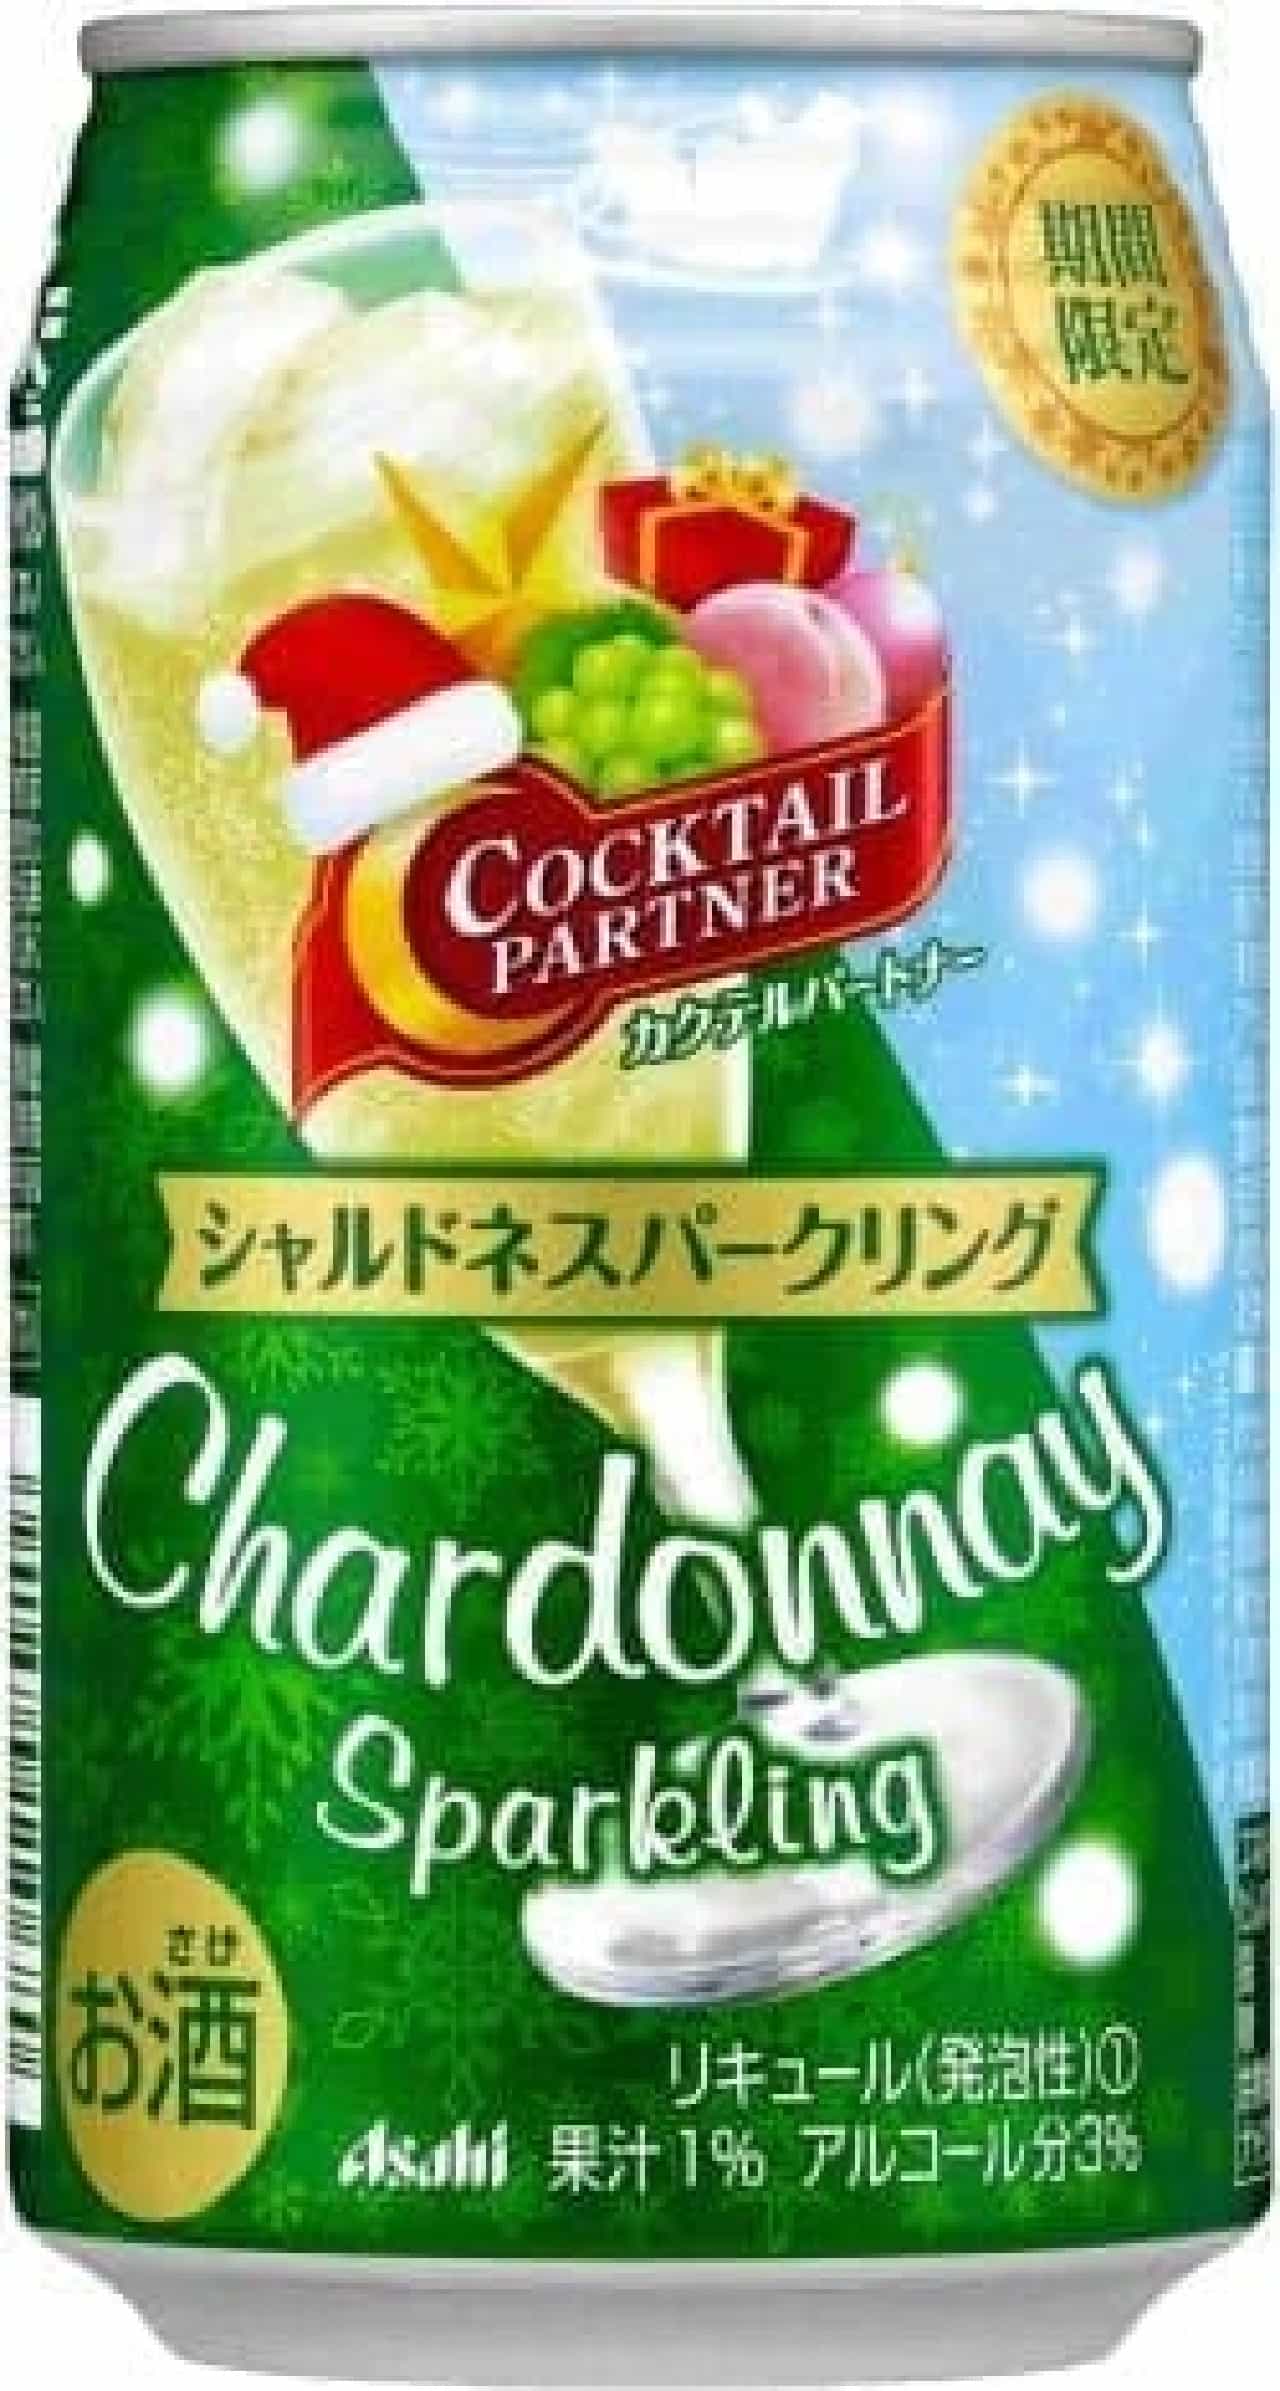 Asahi Cocktail Partner "Chardonnay Sparkling"